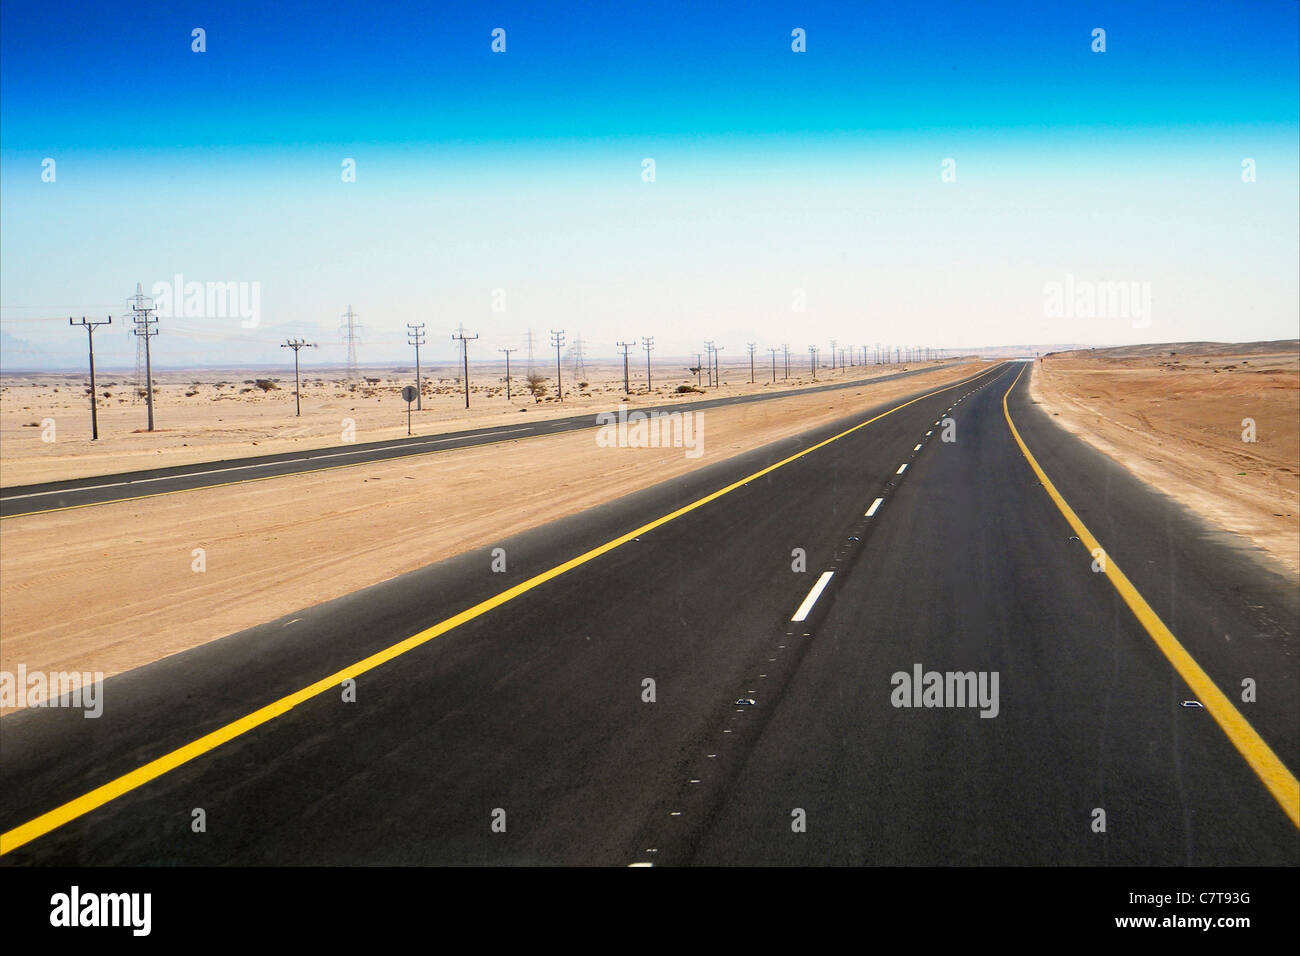 Saudi Arabia, highway in the desert Stock Photo